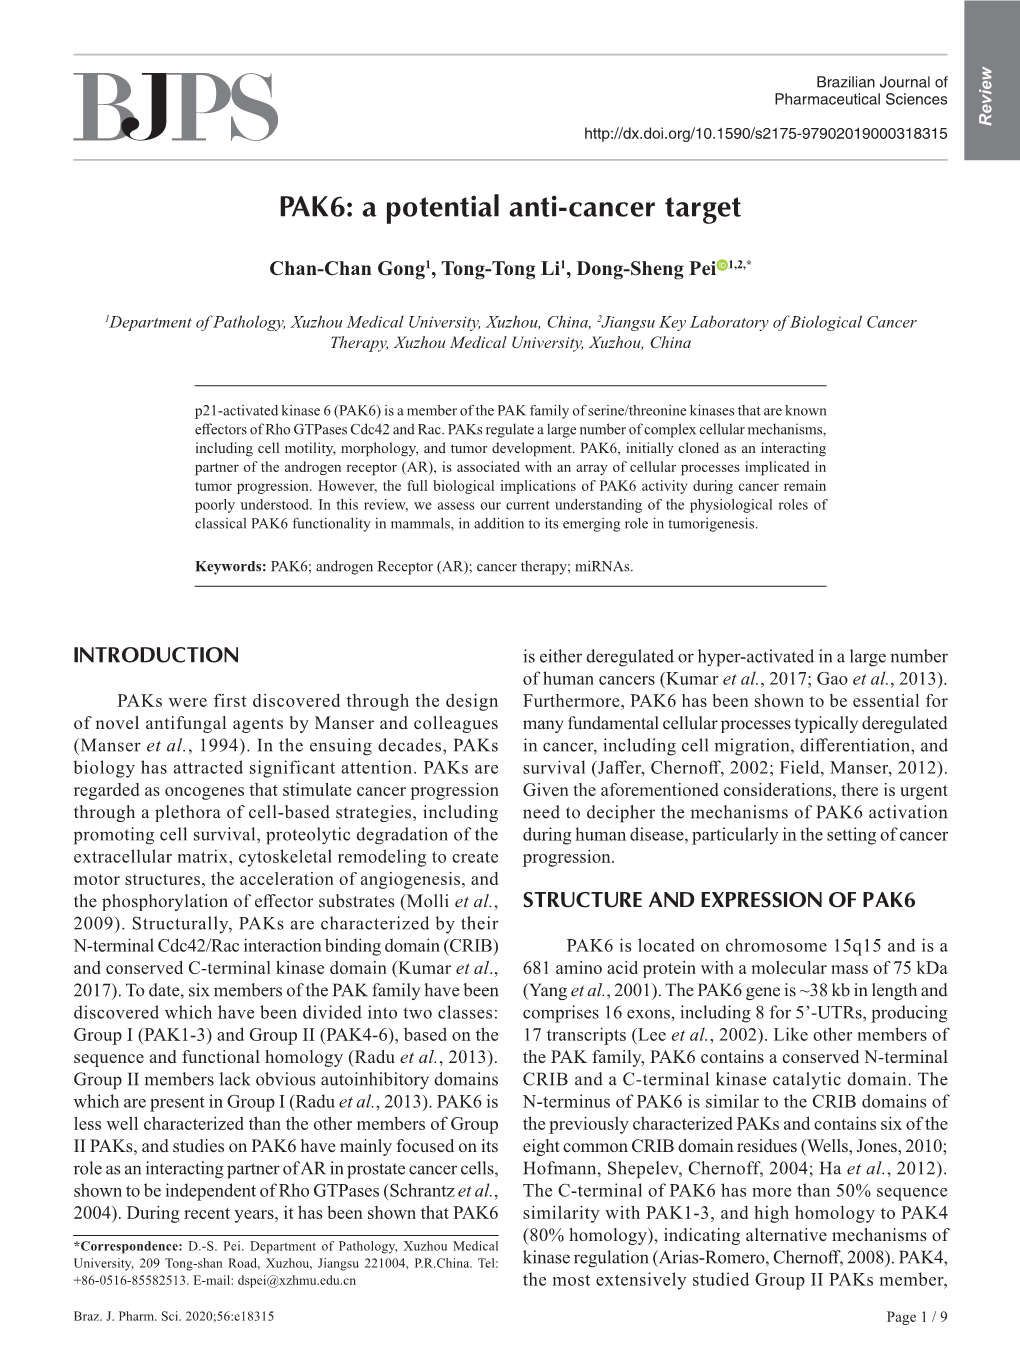 PAK6: a Potential Anti-Cancer Target